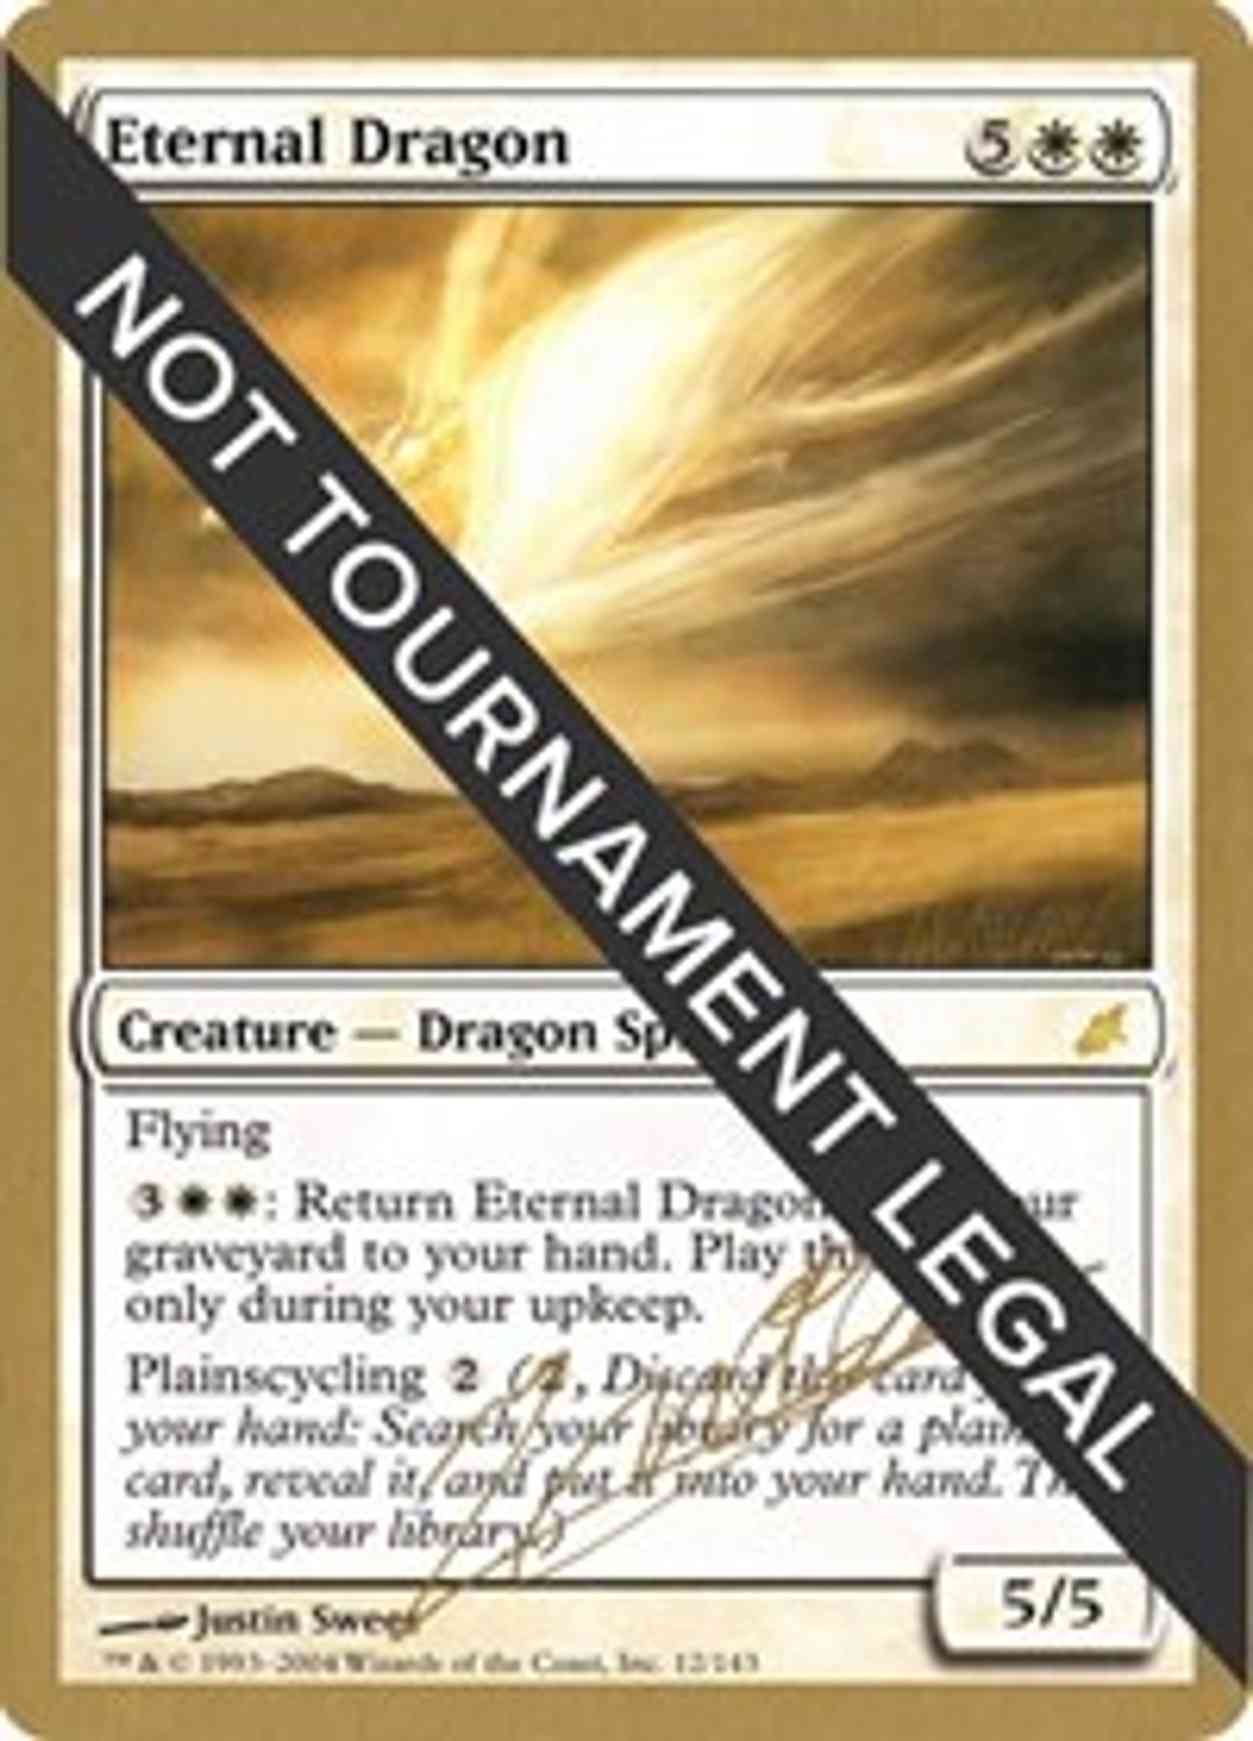 Eternal Dragon - 2004 Gabriel Nassif (SCG) magic card front